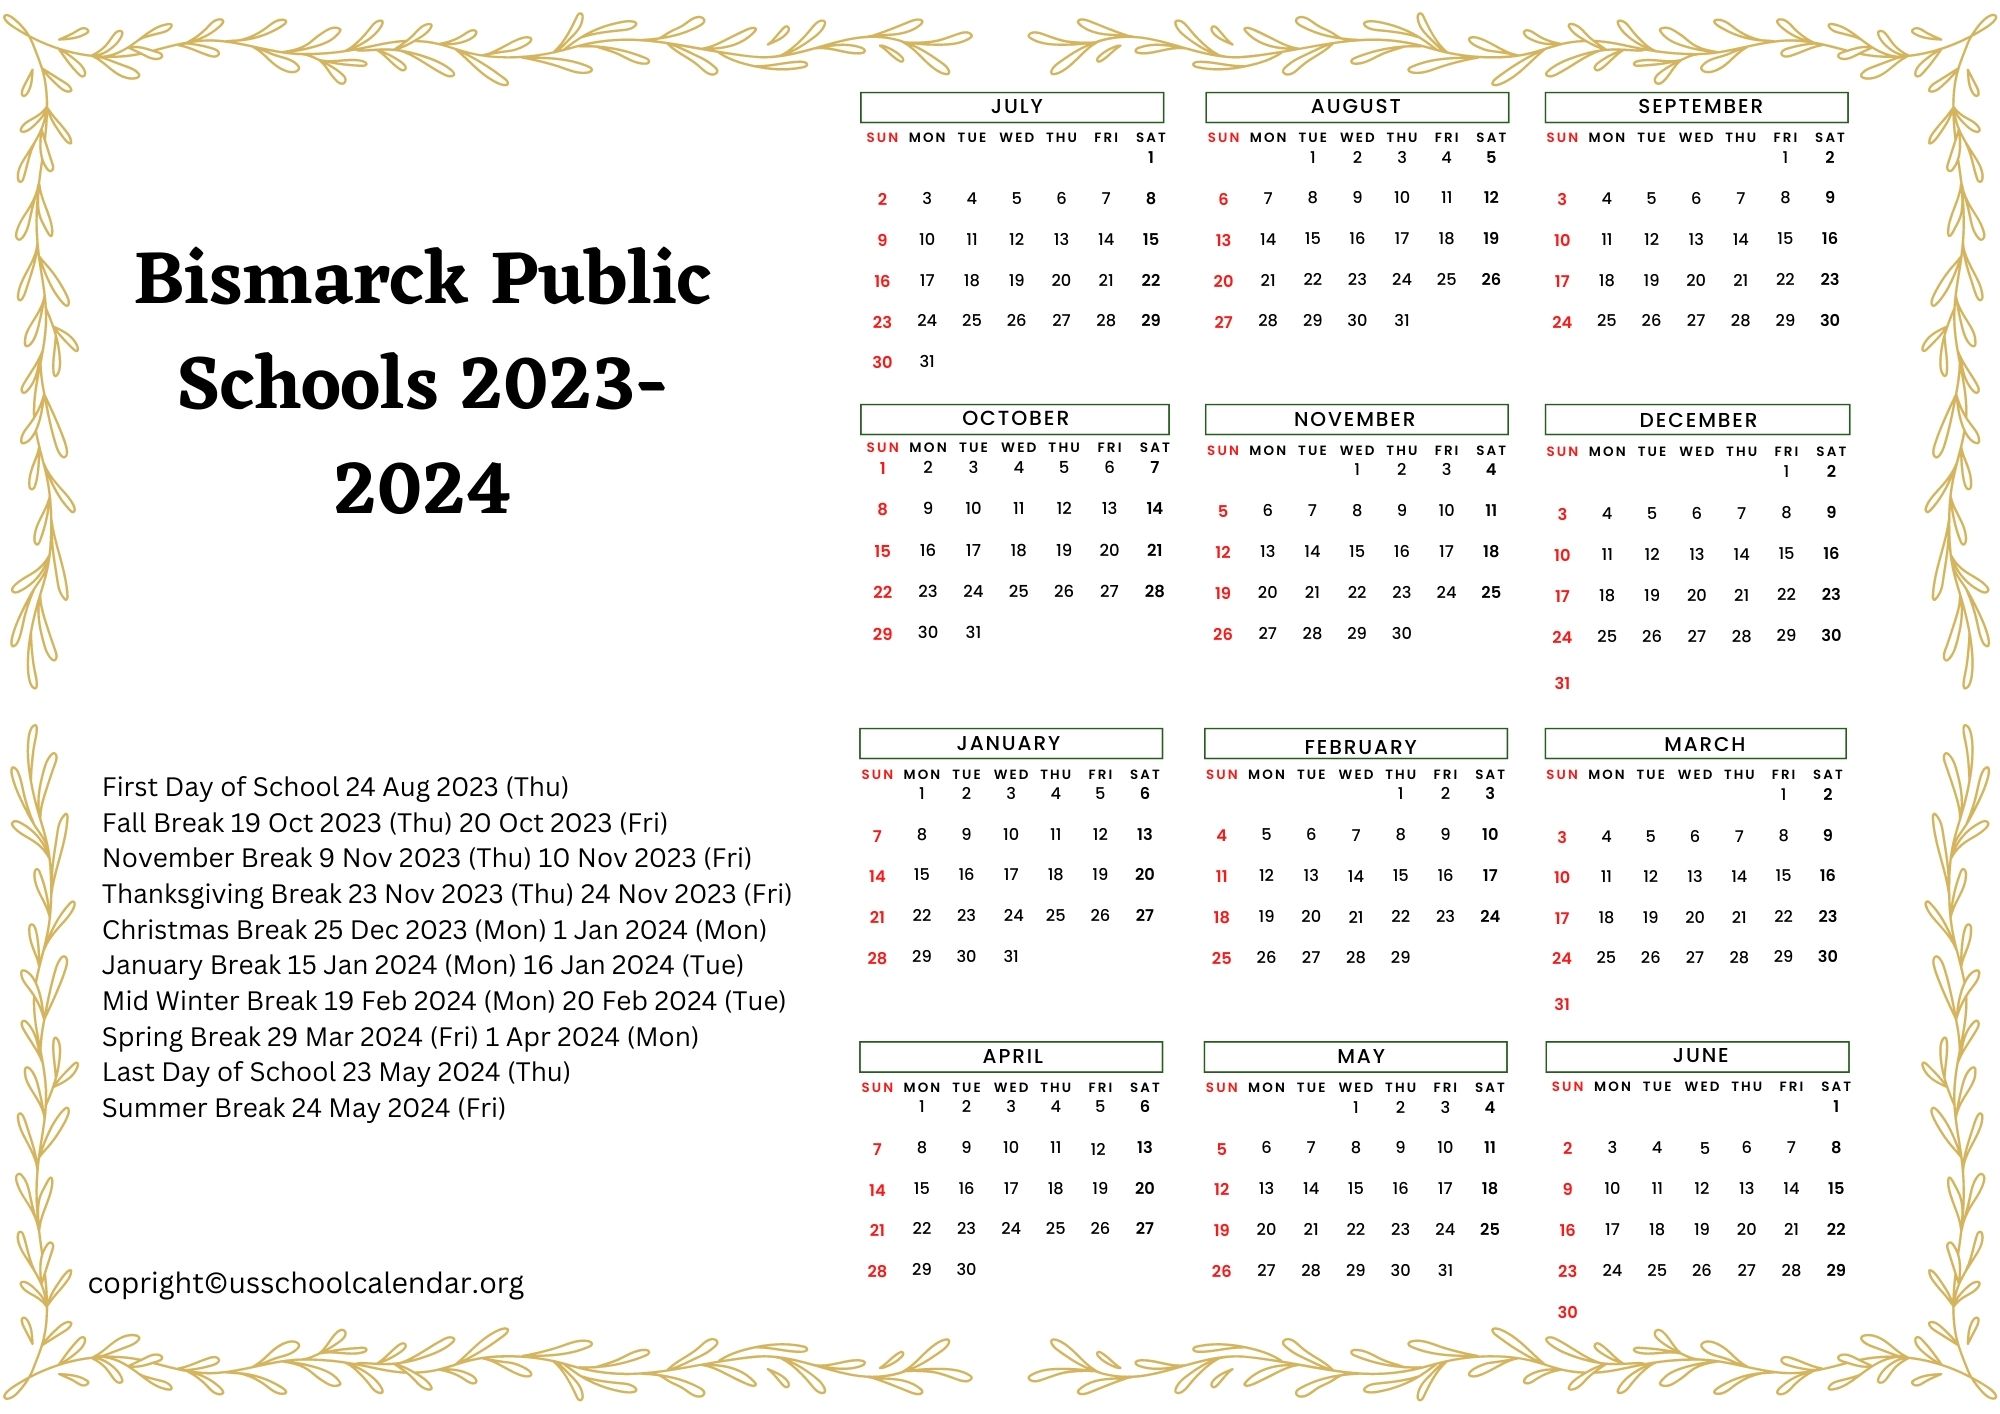 Bismarck Public Schools Calendar with Holidays 20232024